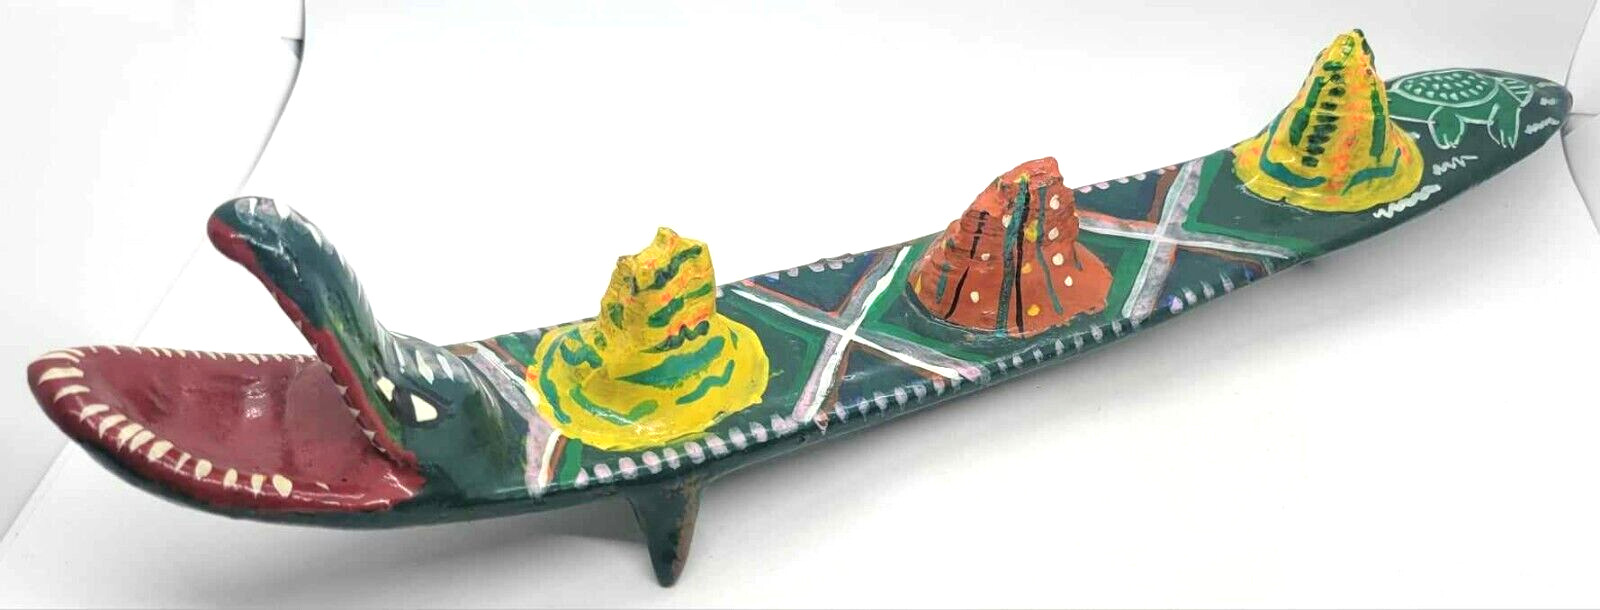 Mexican Folk Art Seed Pod Shaker Alligator Handmade Rattle Painted Turtle